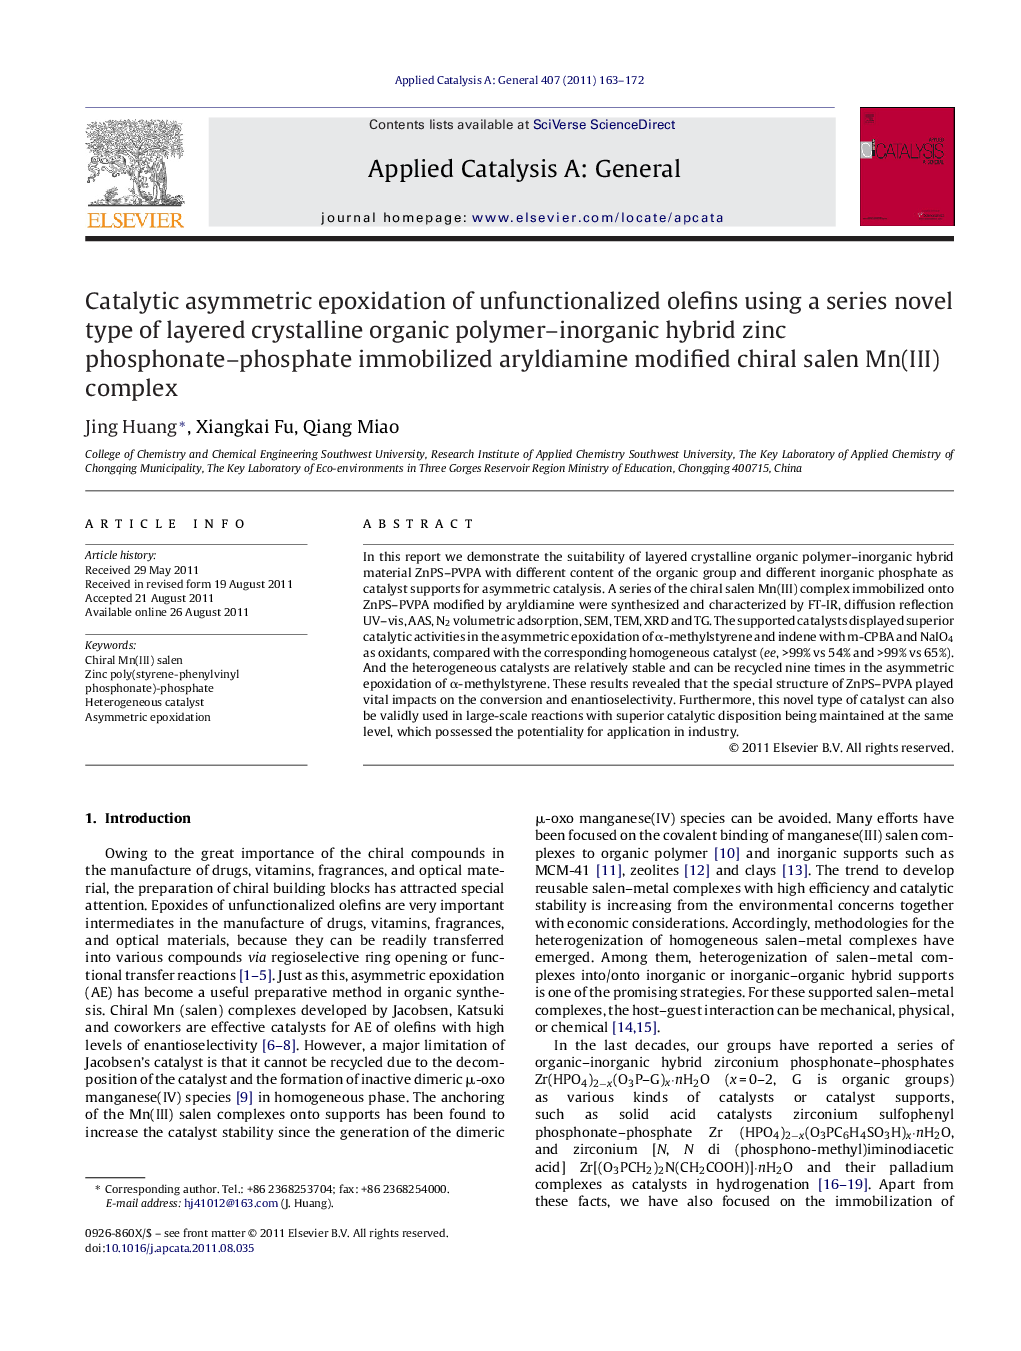 Catalytic asymmetric epoxidation of unfunctionalized olefins using a series novel type of layered crystalline organic polymer–inorganic hybrid zinc phosphonate–phosphate immobilized aryldiamine modified chiral salen Mn(III) complex